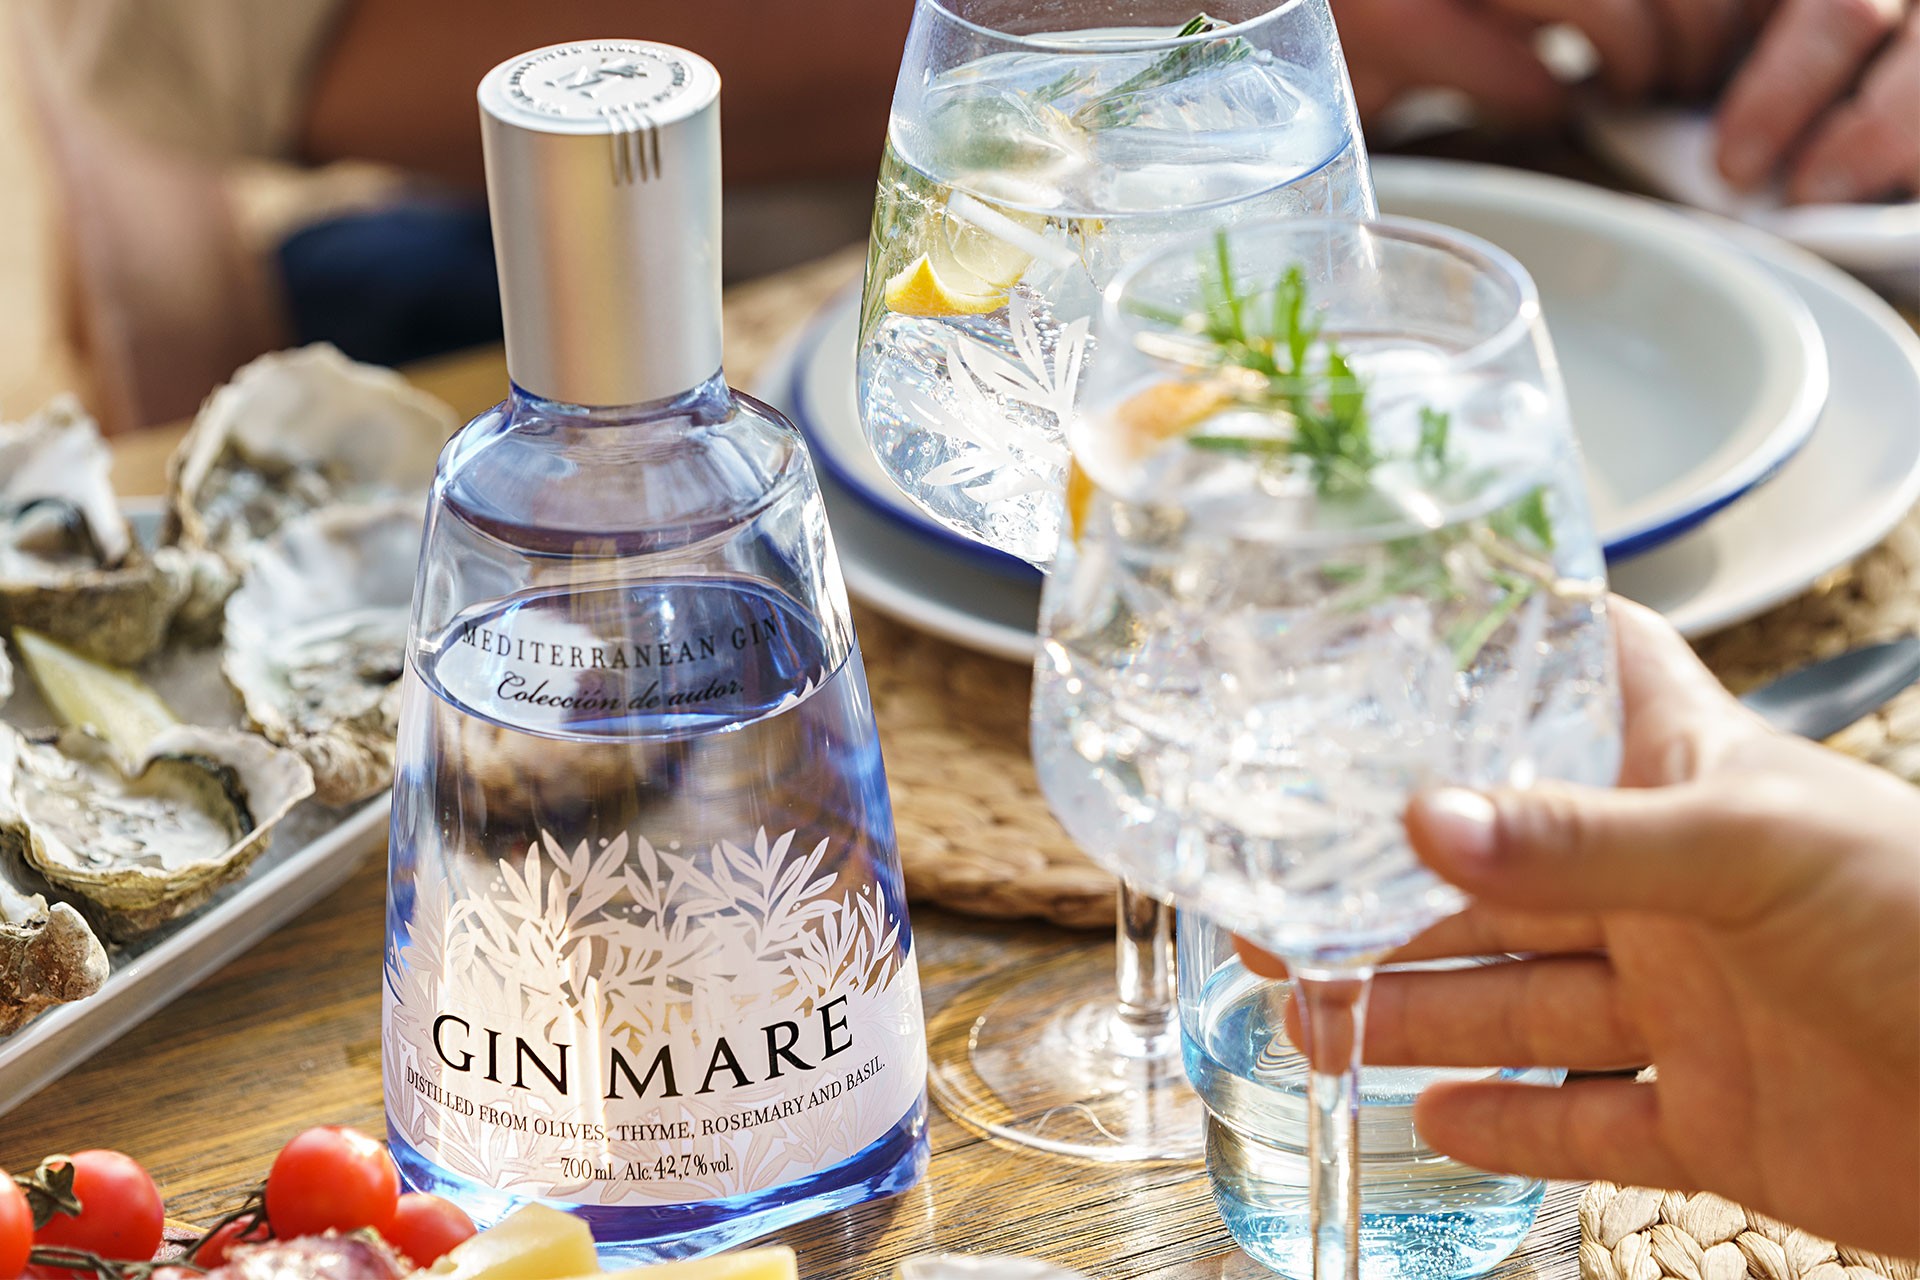 Gin Mare - Mediterranean Gin - Public Wine, Beer and Spirits